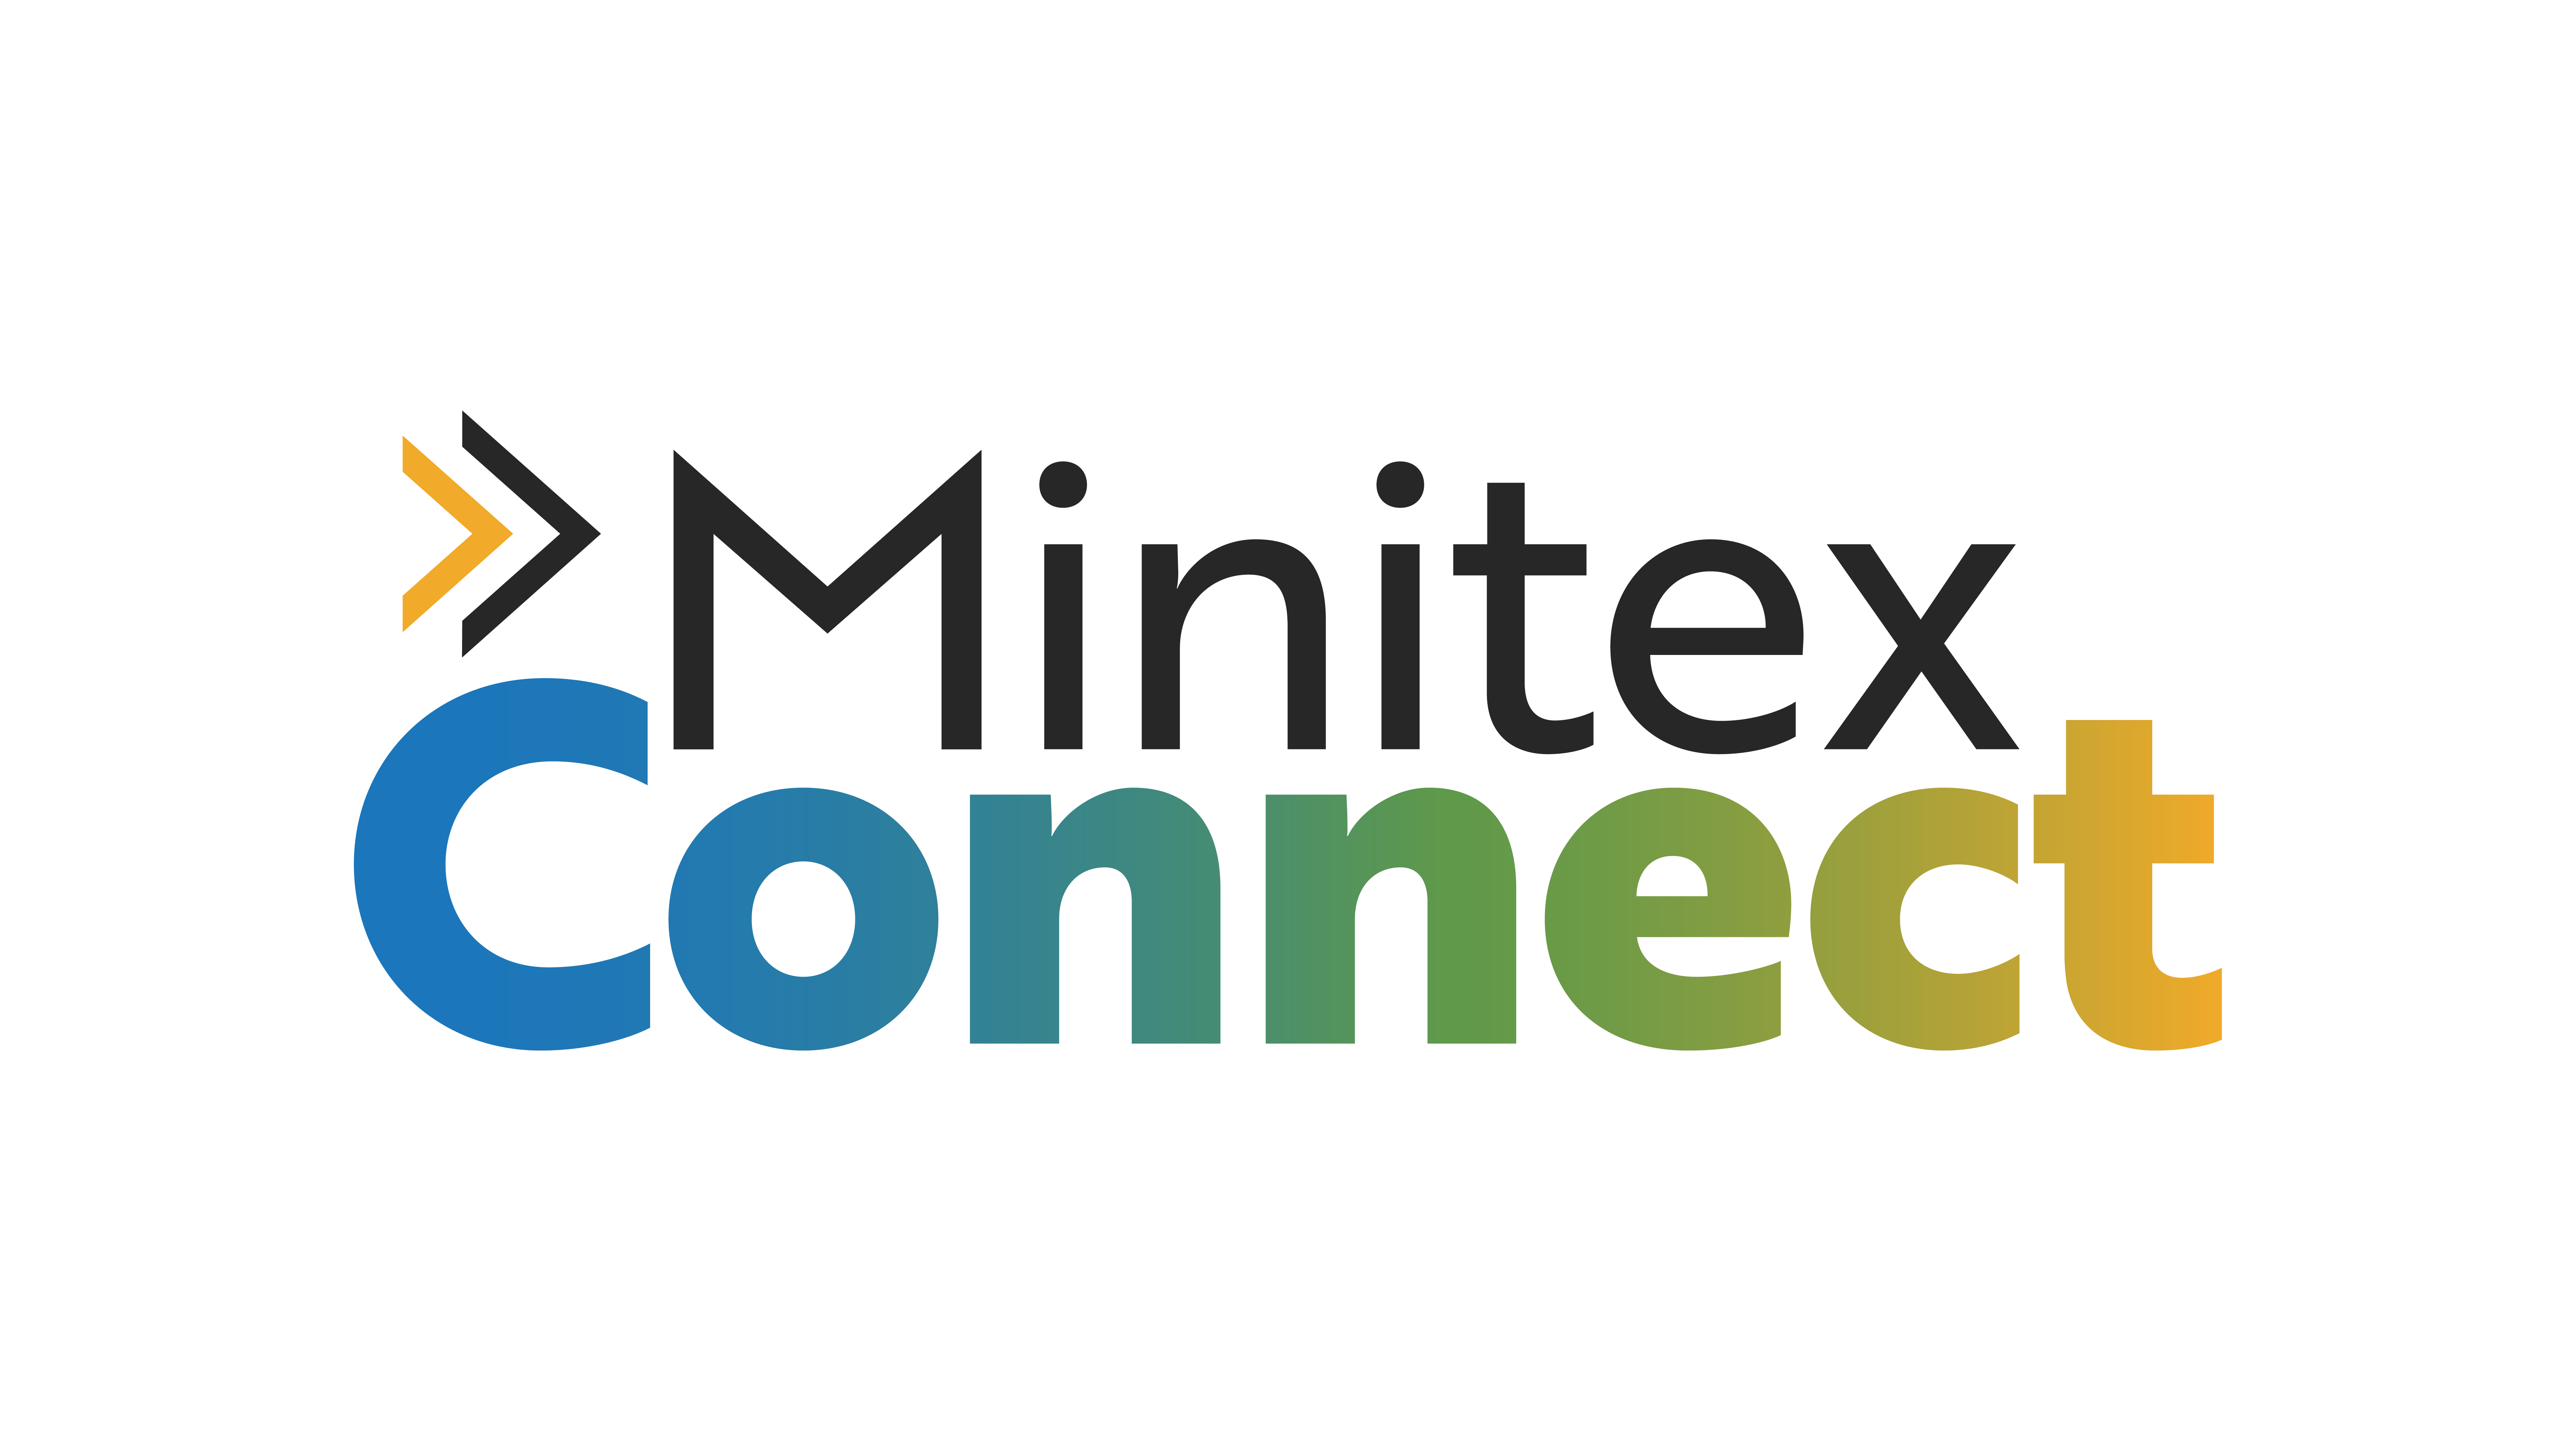 The Minitex Connect logo.